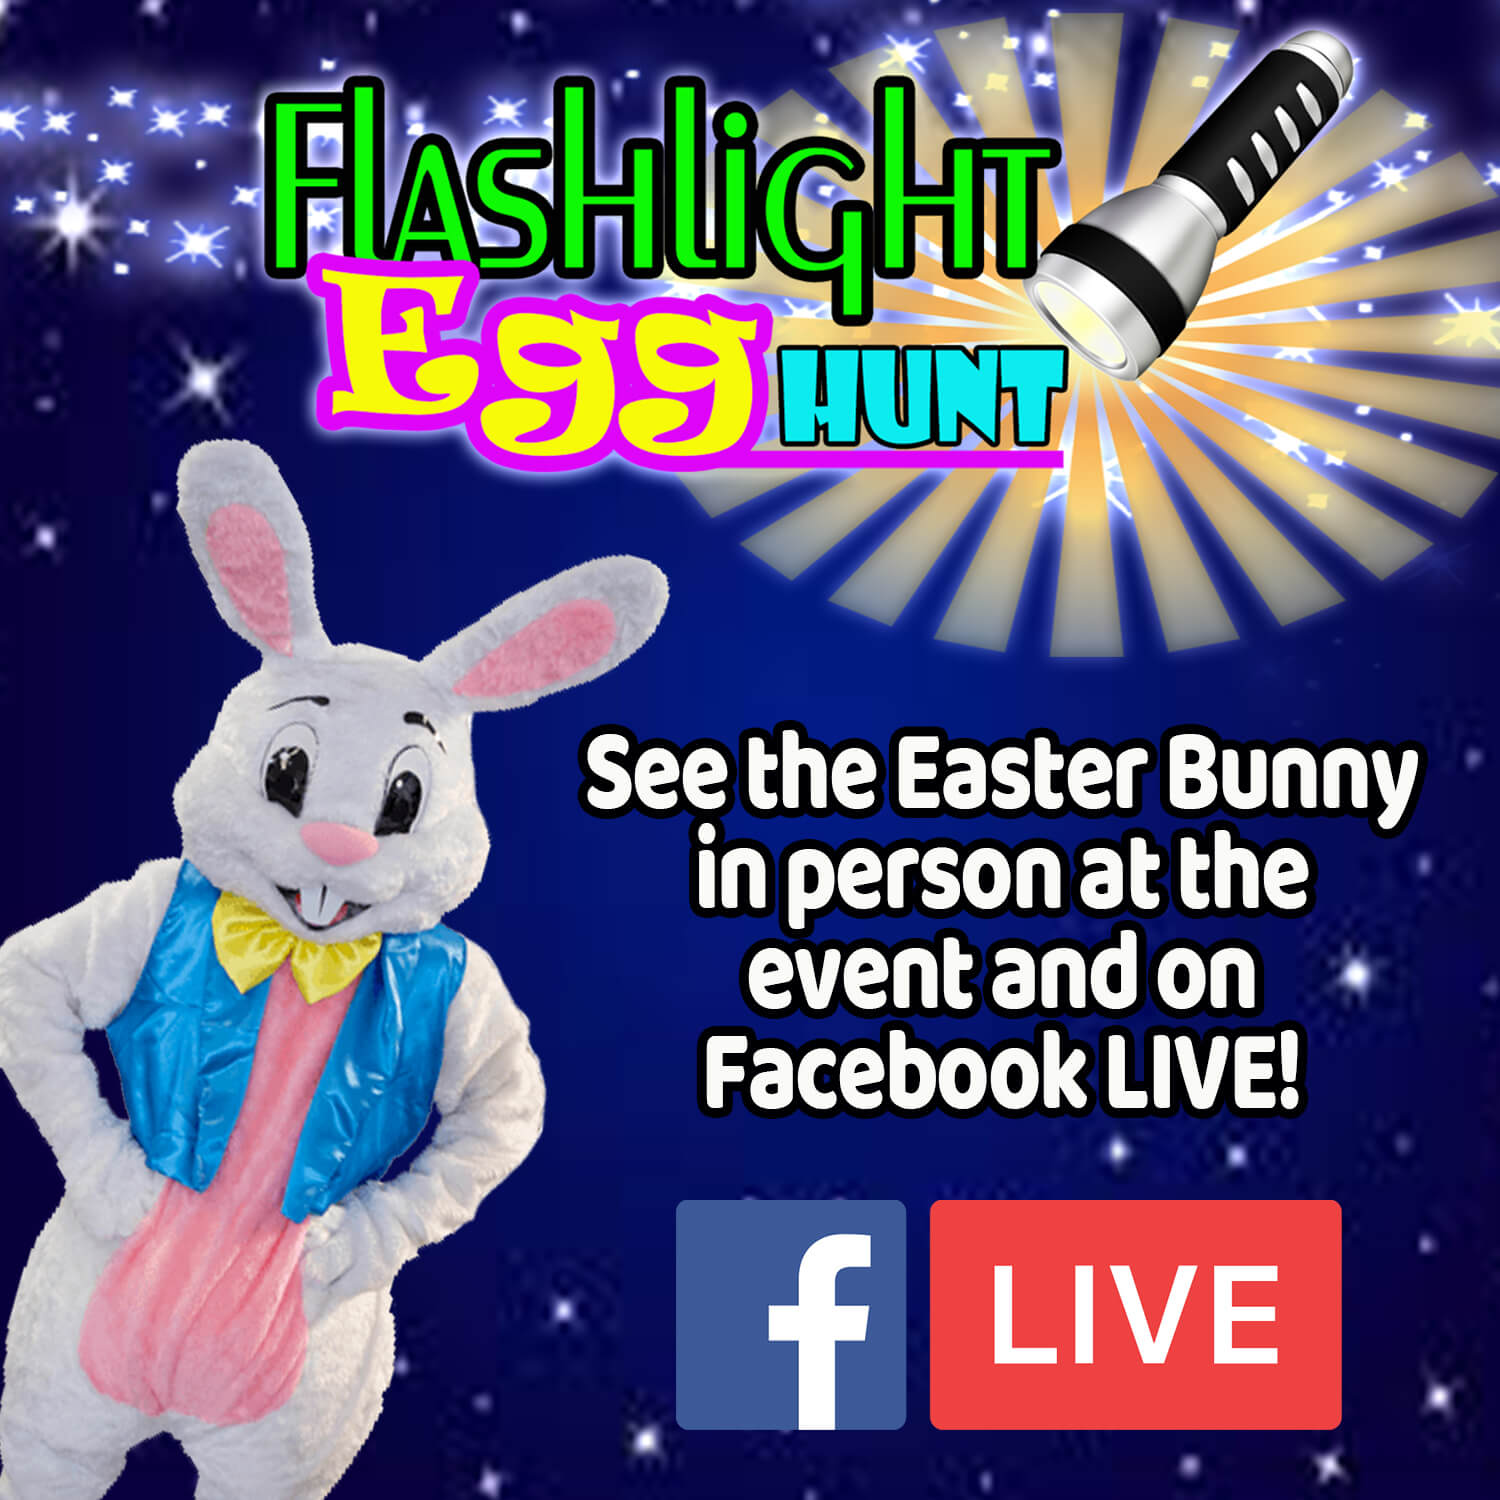 Flashlight Easter Egg Hunt Round Rock, Texas Movie